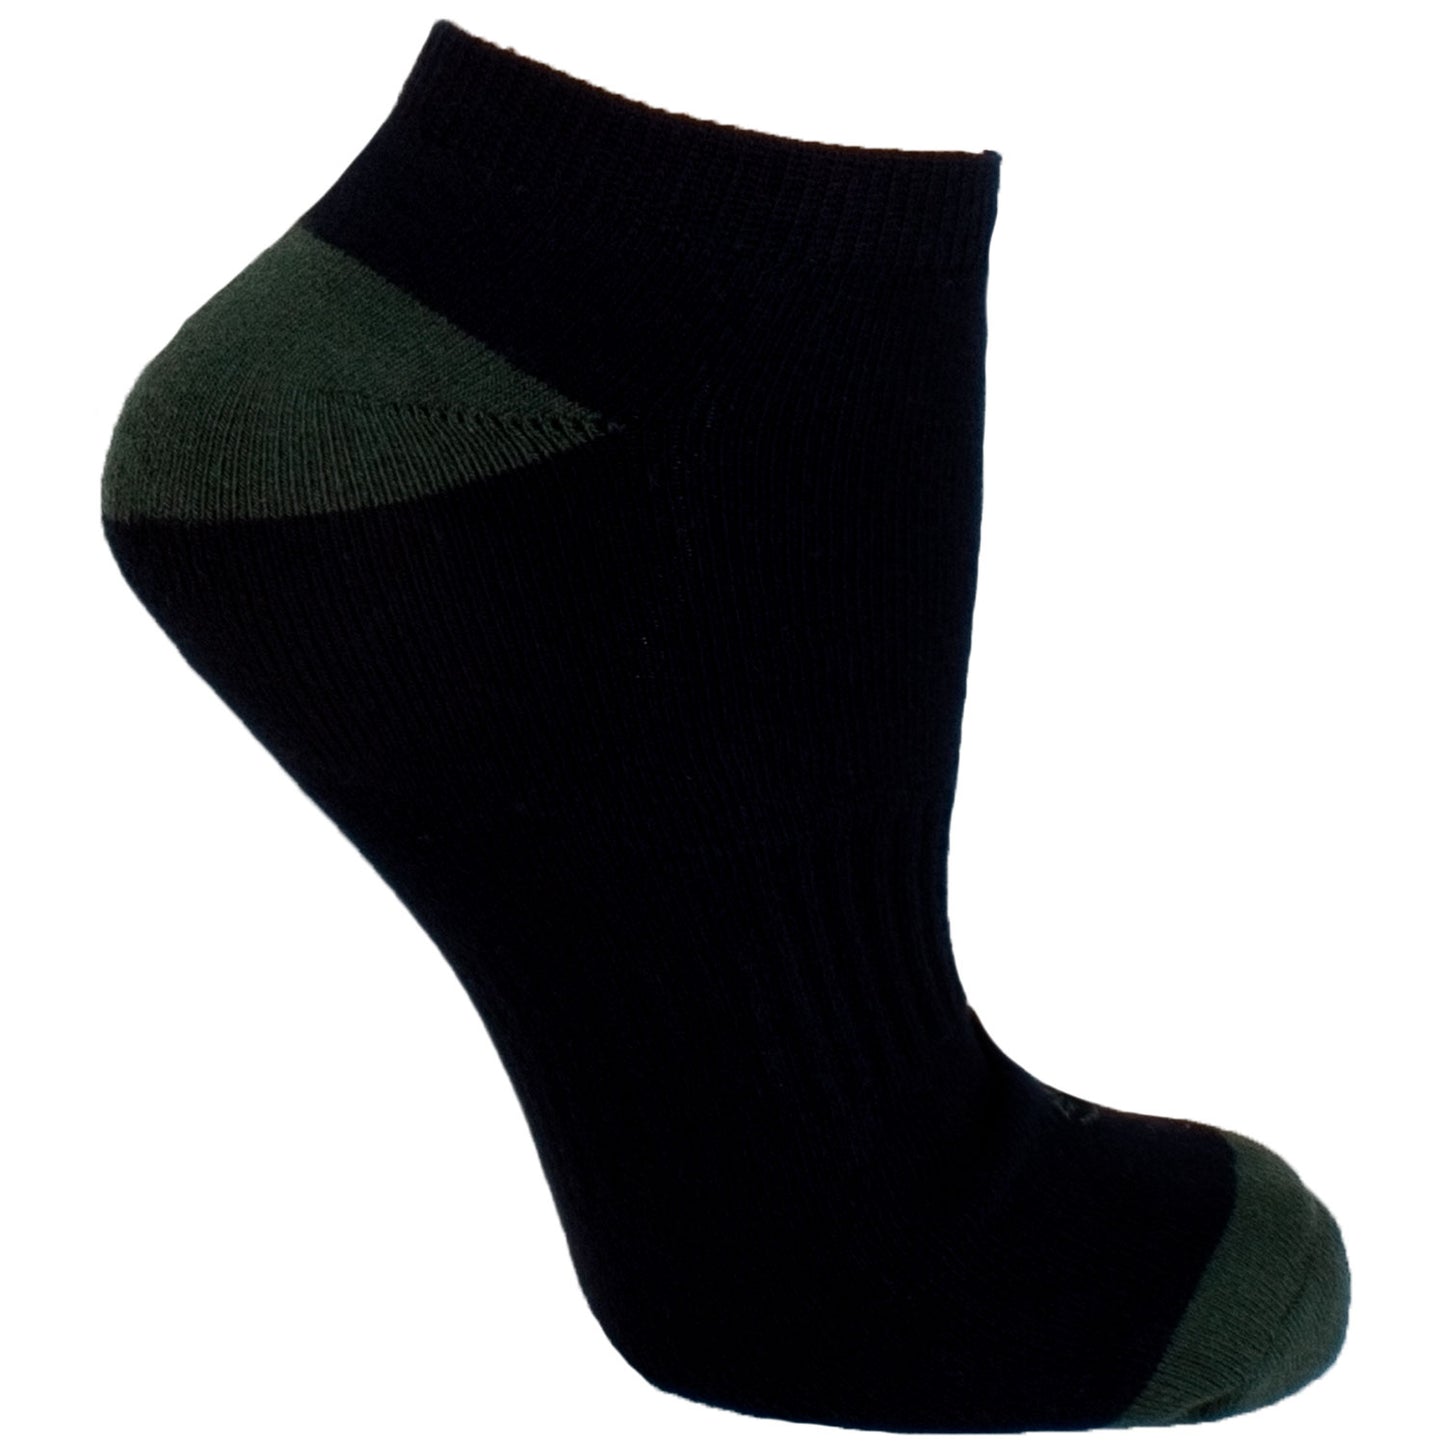 Men's Socks Athletic Performance Comfortable Colorblock No Show Cotton Hosiery Green